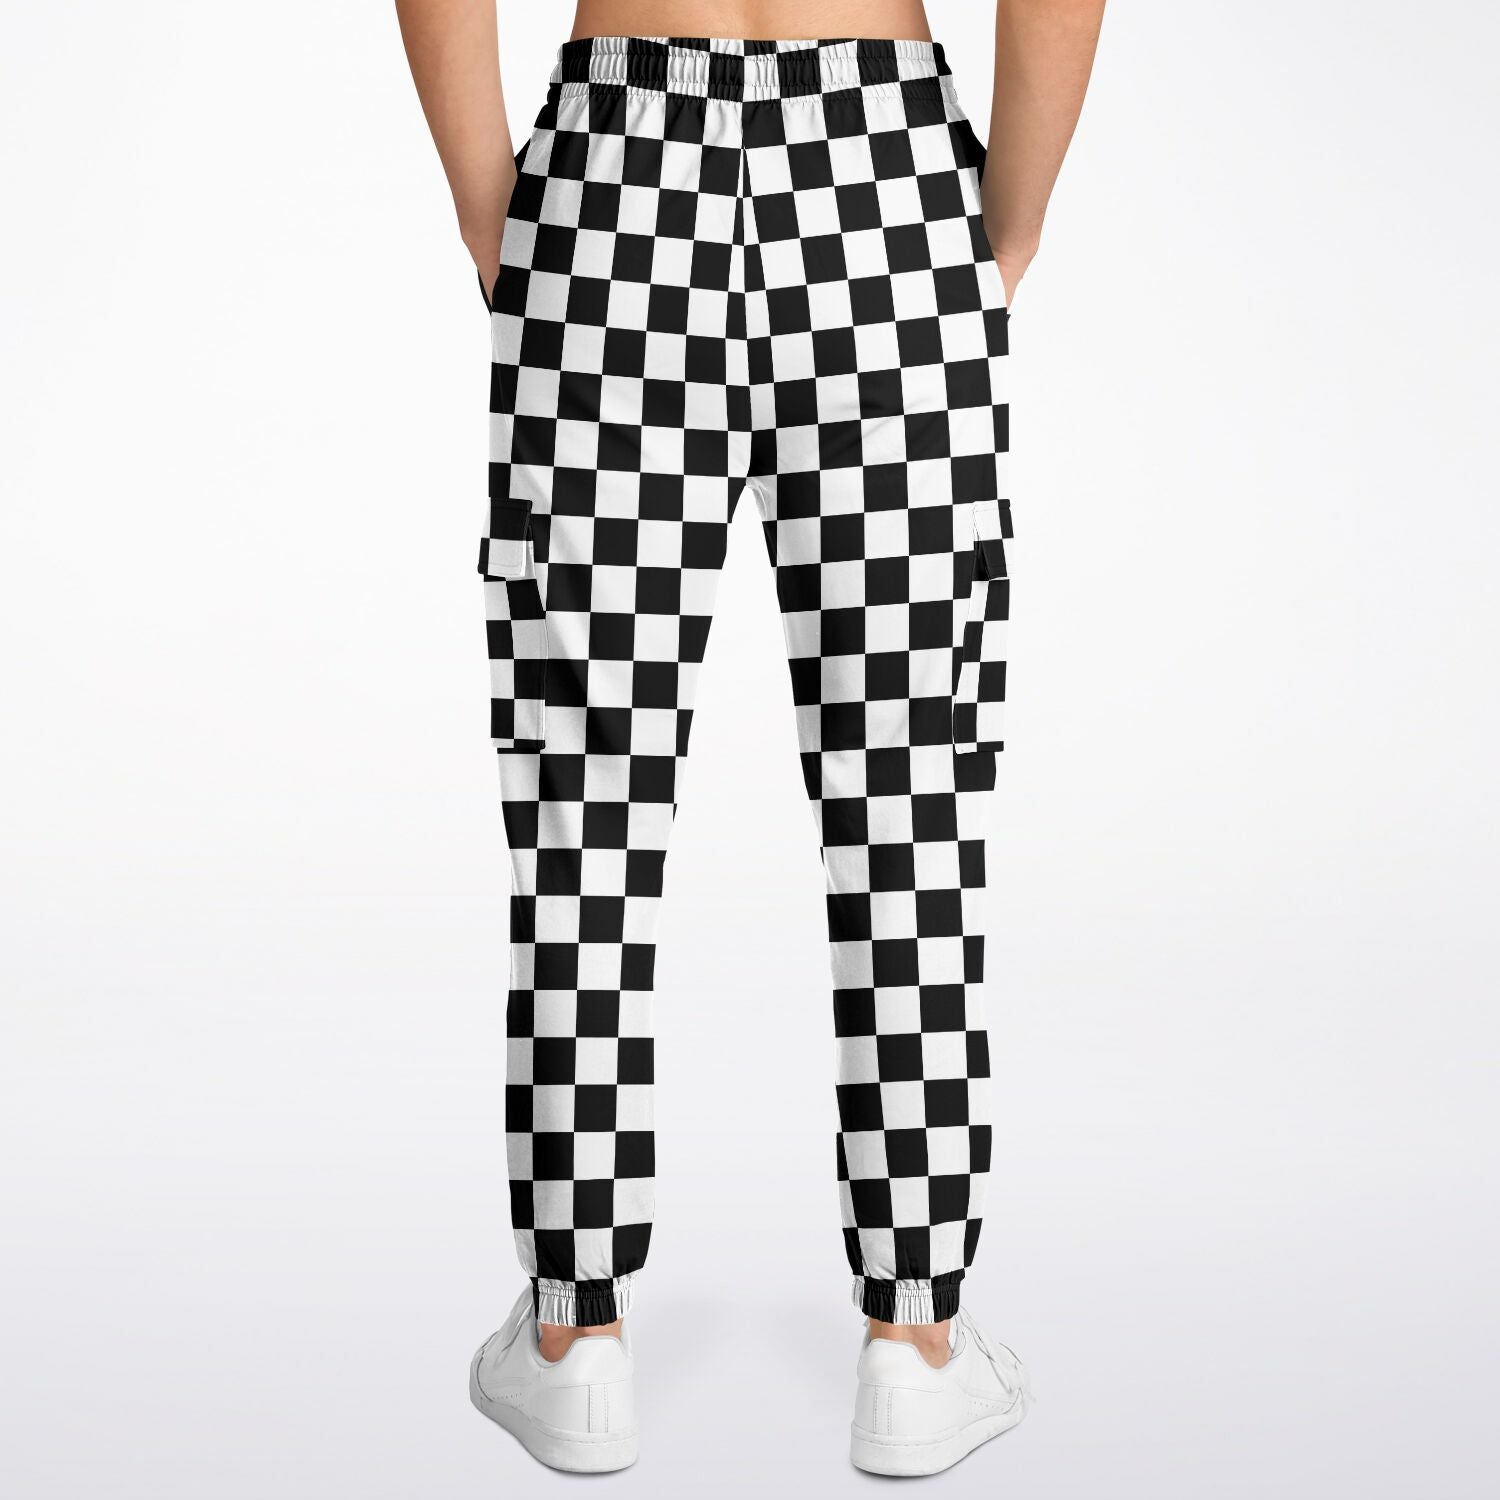 Black Sweatpants Male All Matching Casual Checkered Drawstring Slim Fit  Leggings Pants Sports Shopping Fashion Pants - Walmart.com